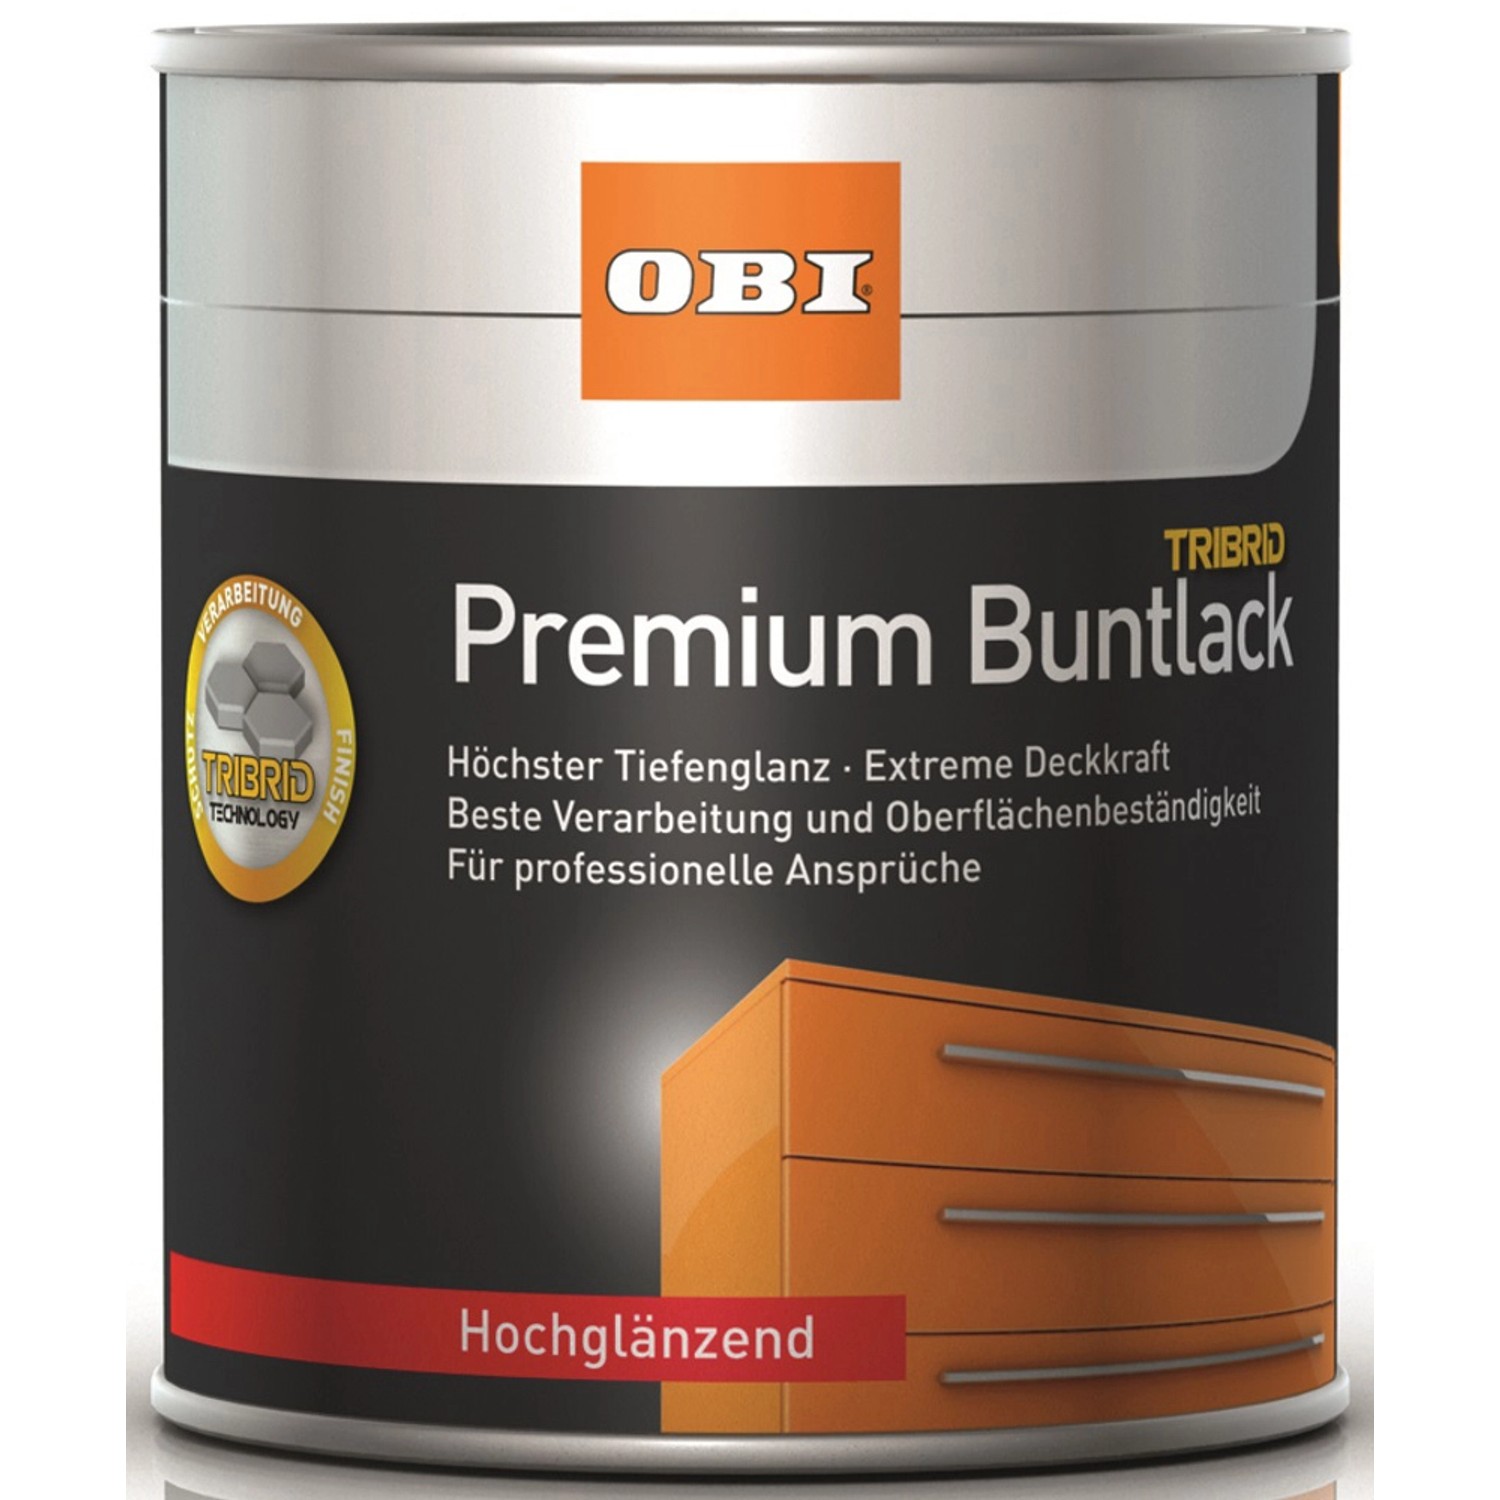 OBI Premium Buntlack Tribrid Rubinrot hochglänzend 750 ml